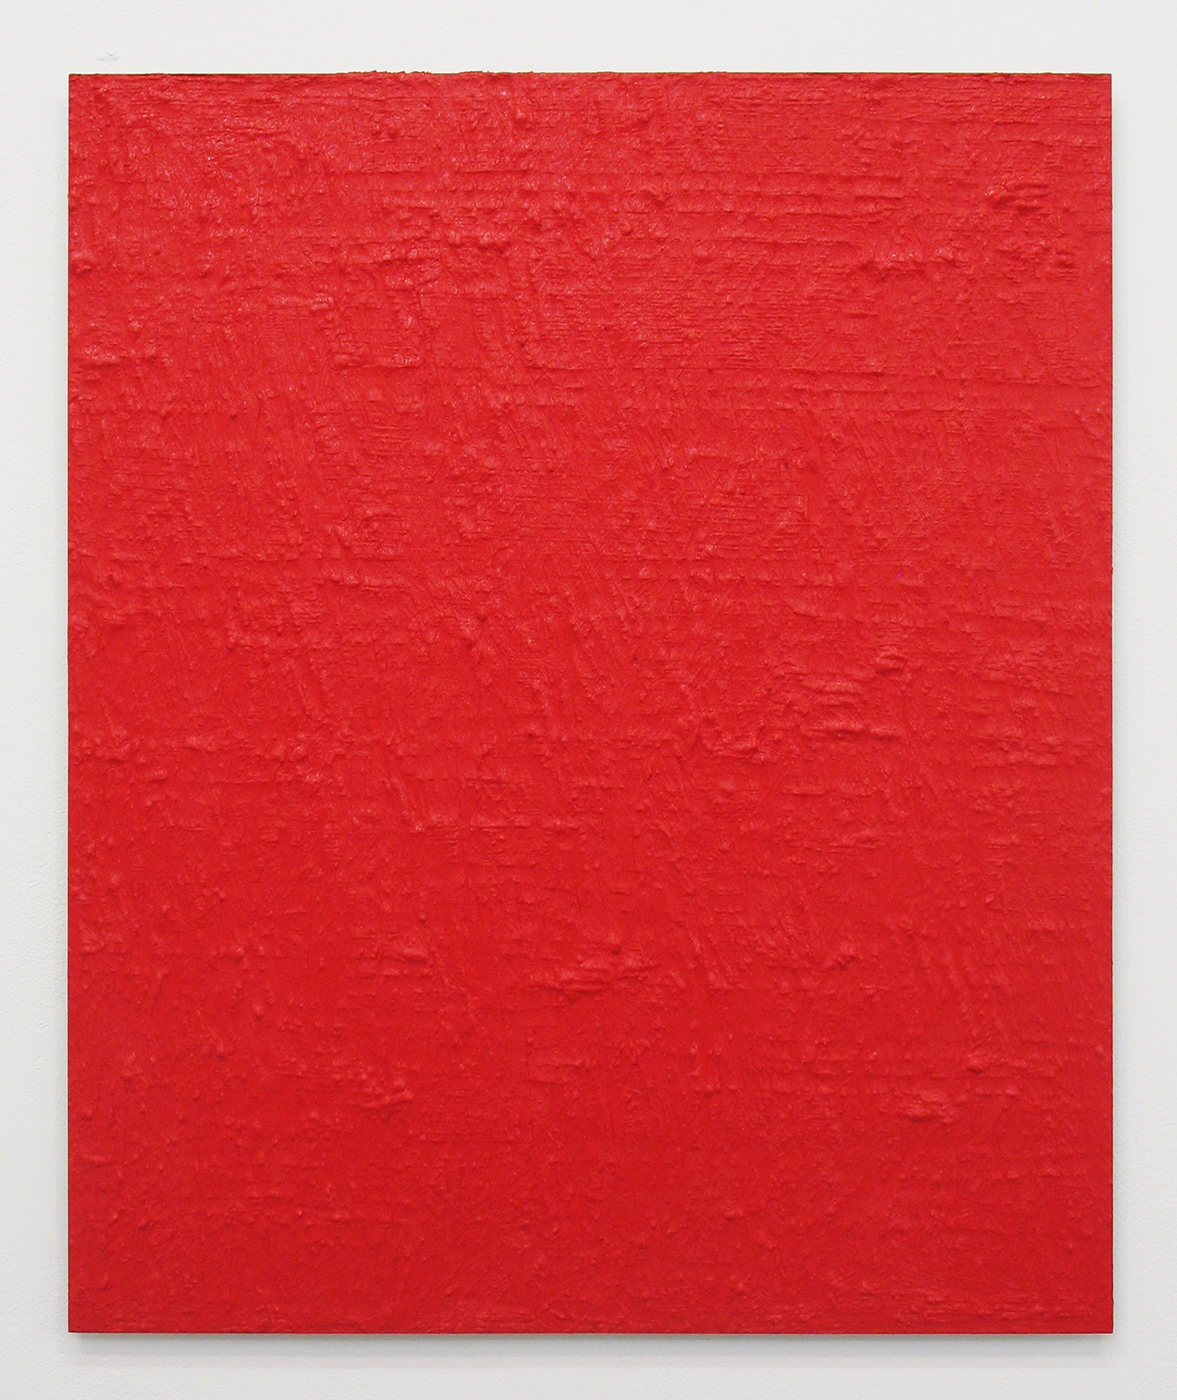 Untitled-Red｜Oil on aluminum｜Oil on aluminum｜606 x 500 mm｜2012